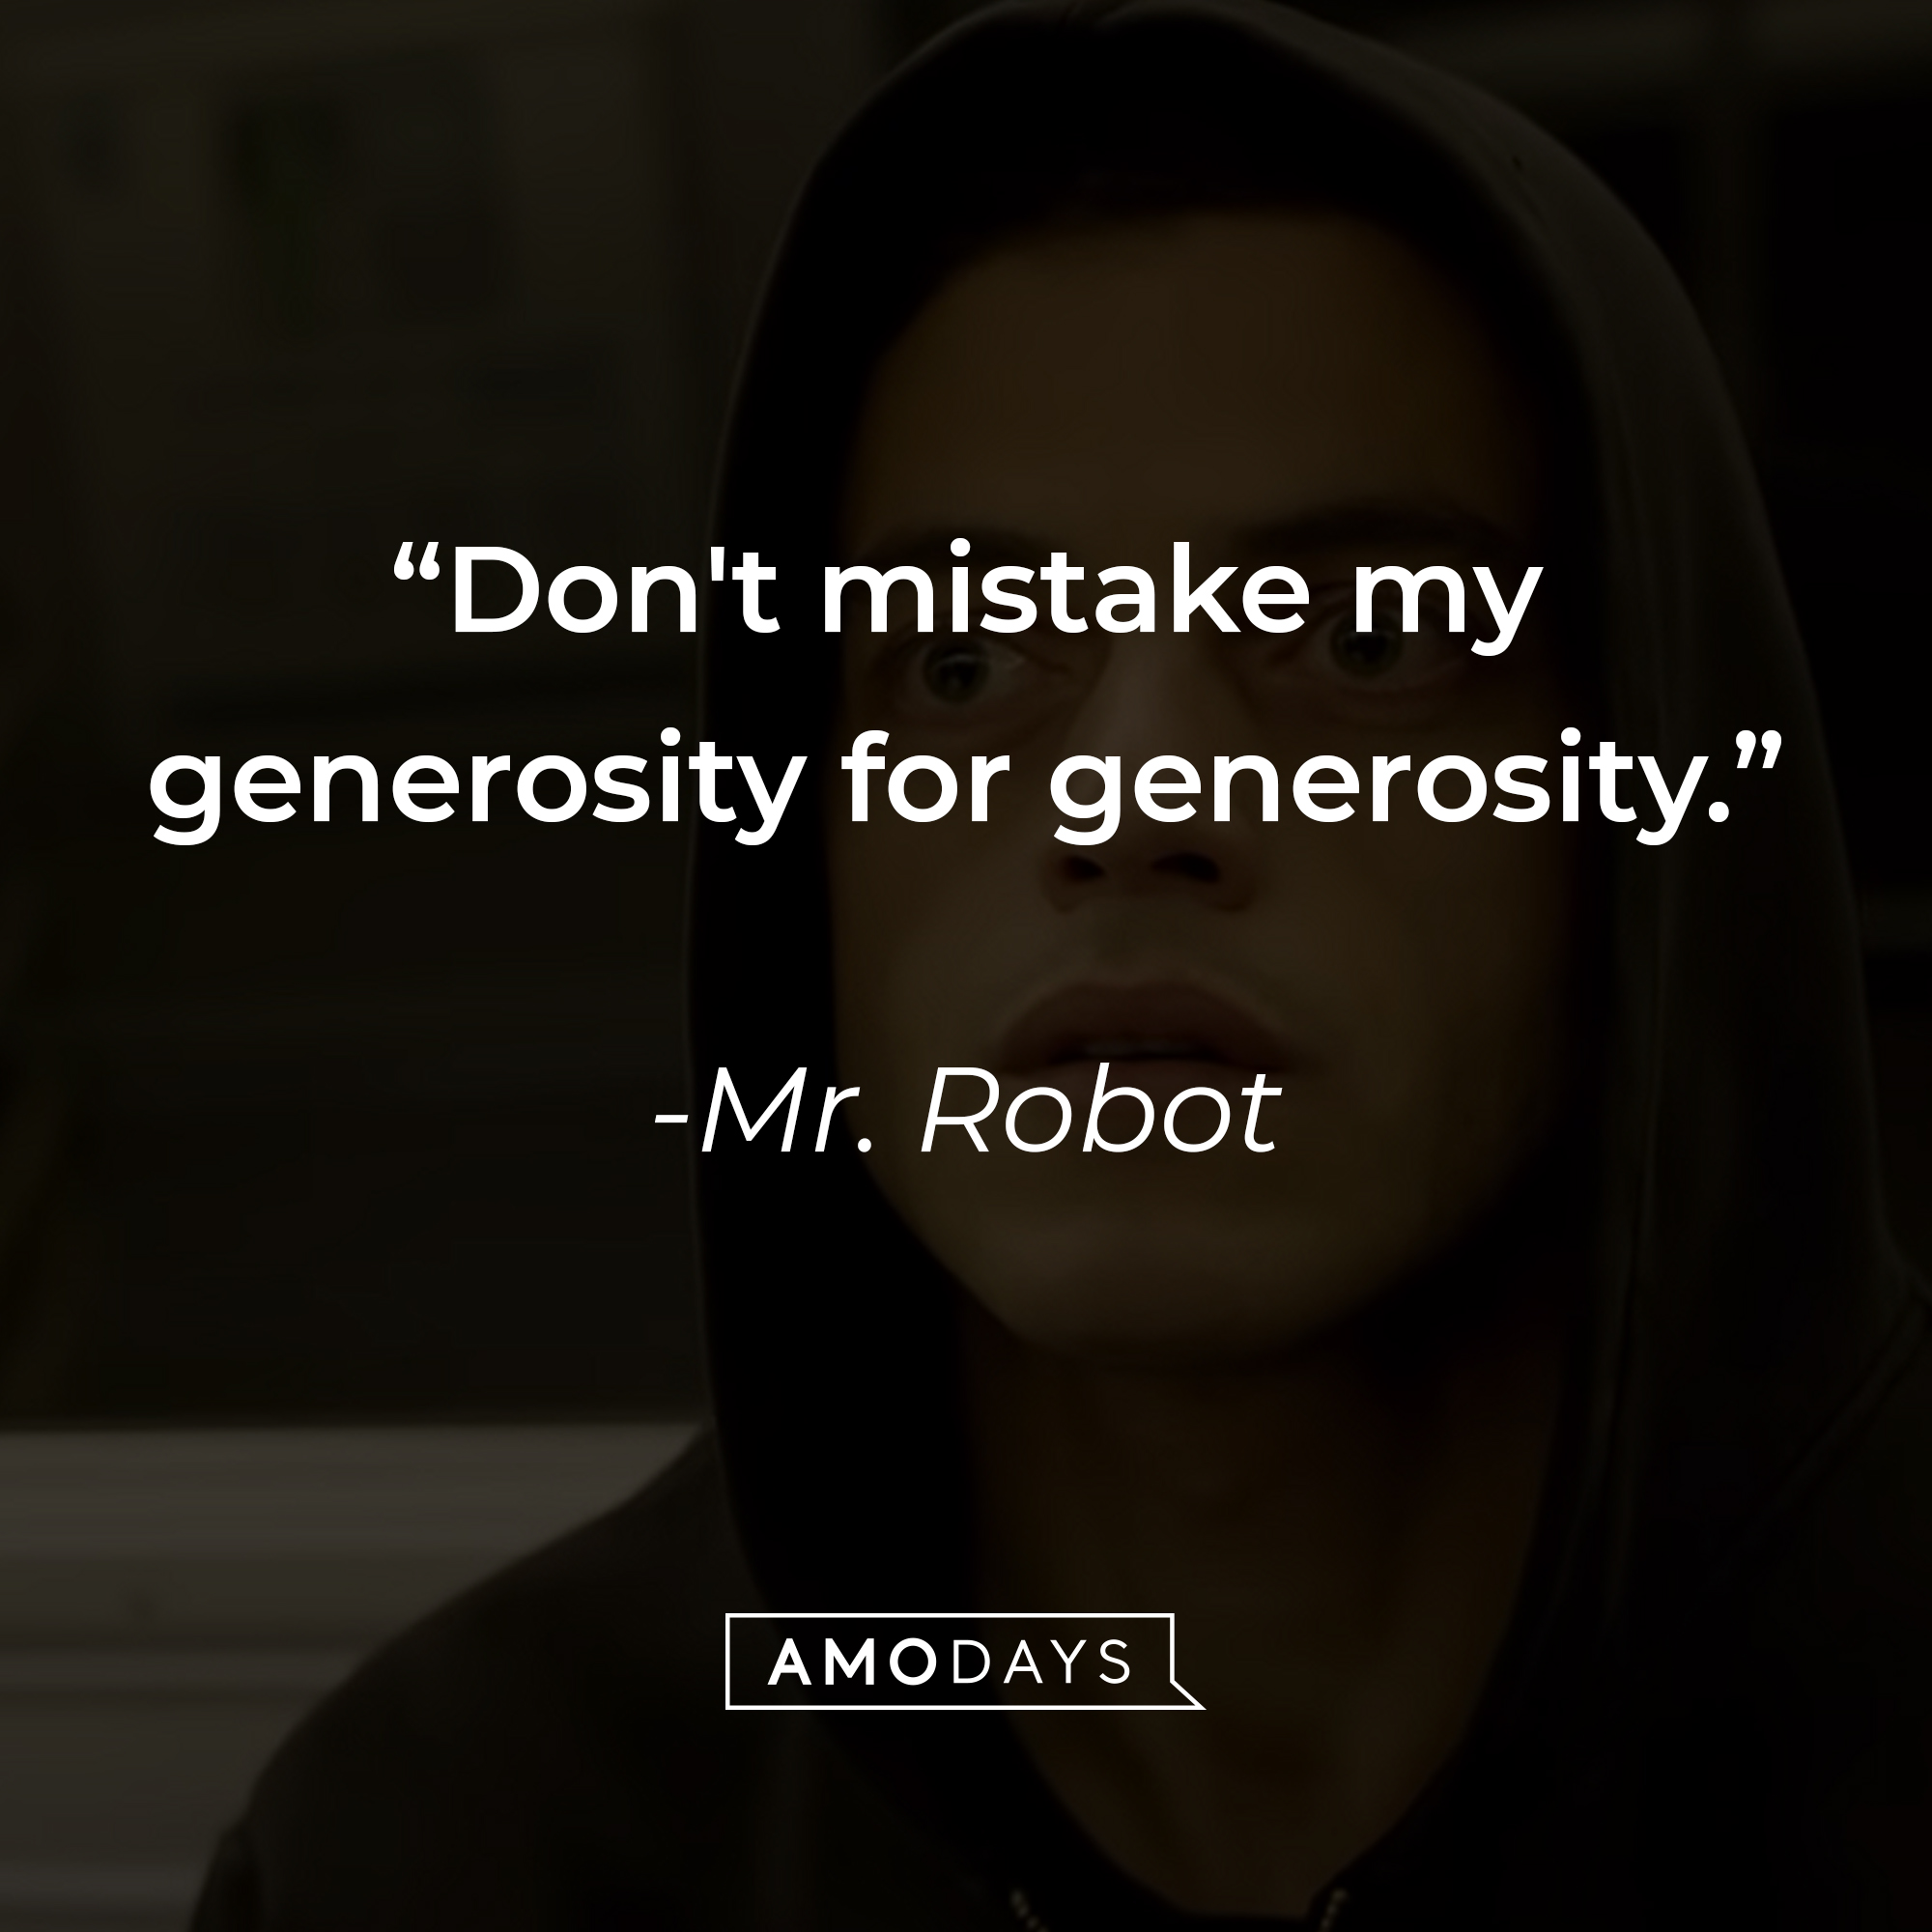 Mr. Robot's quote: "Don't mistake my generosity for generosity." | Source: youtube.com/MrRobot